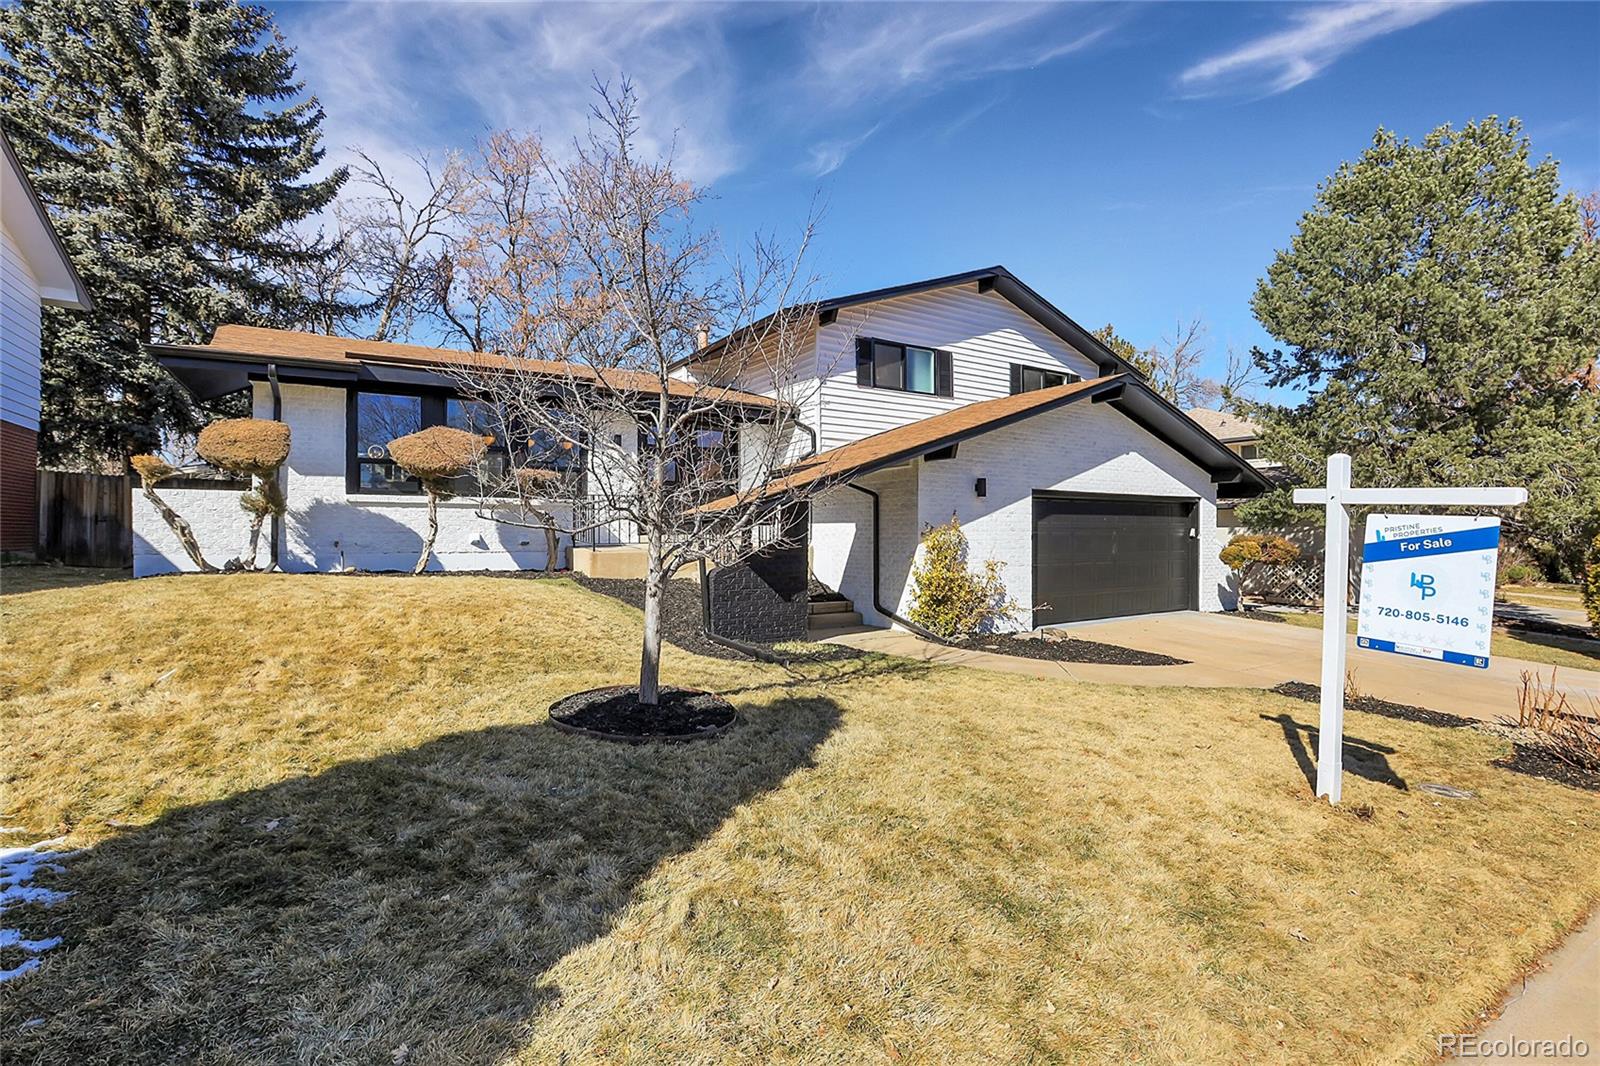 7641 e oxford avenue, Denver sold home. Closed on 2024-03-29 for $990,000.